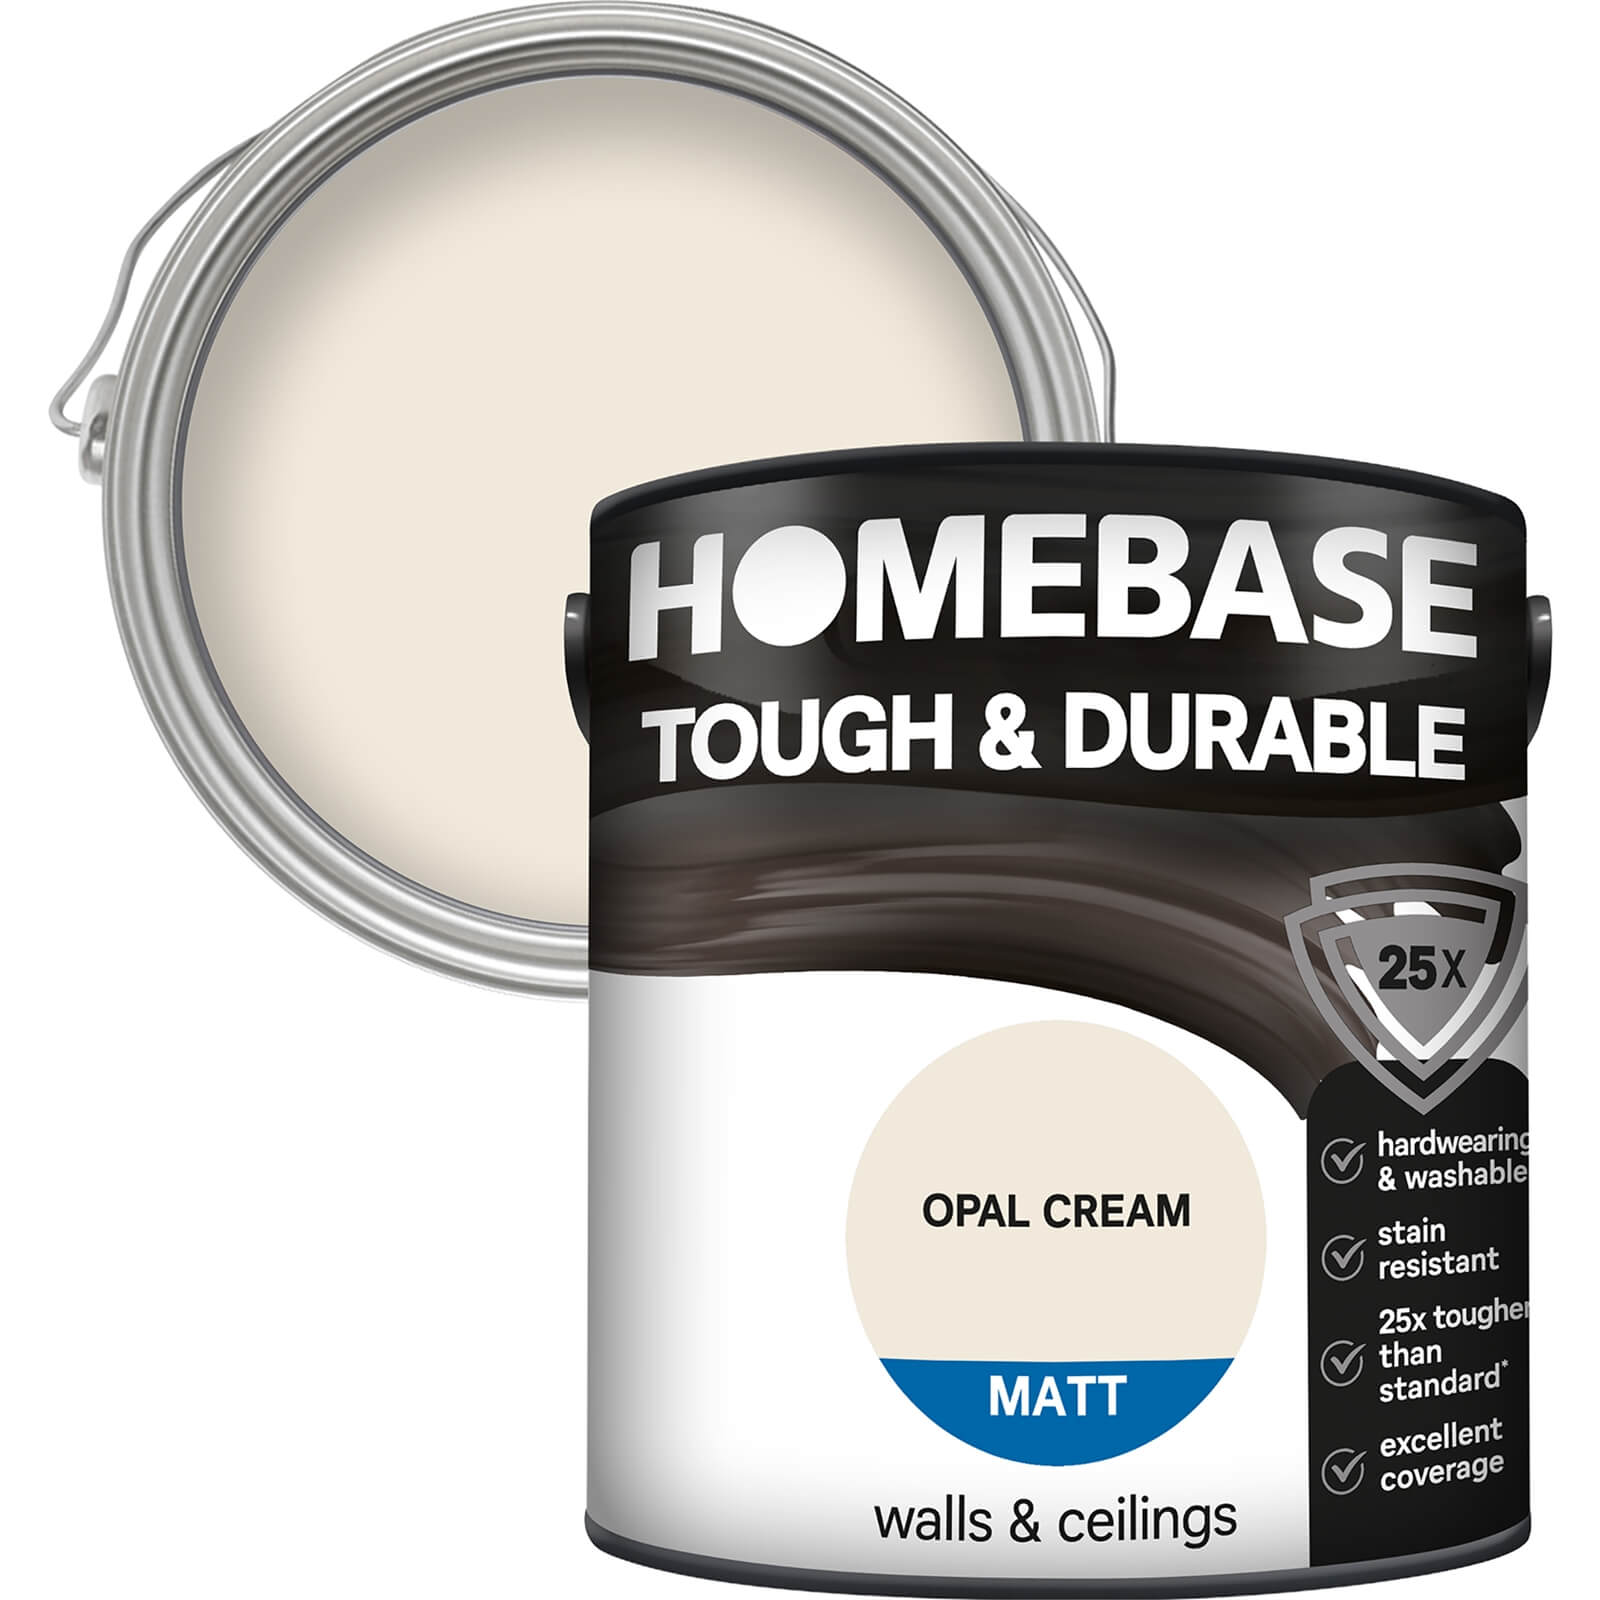 Homebase Tough & Durable Matt Paint Opal Cream - 2.5L